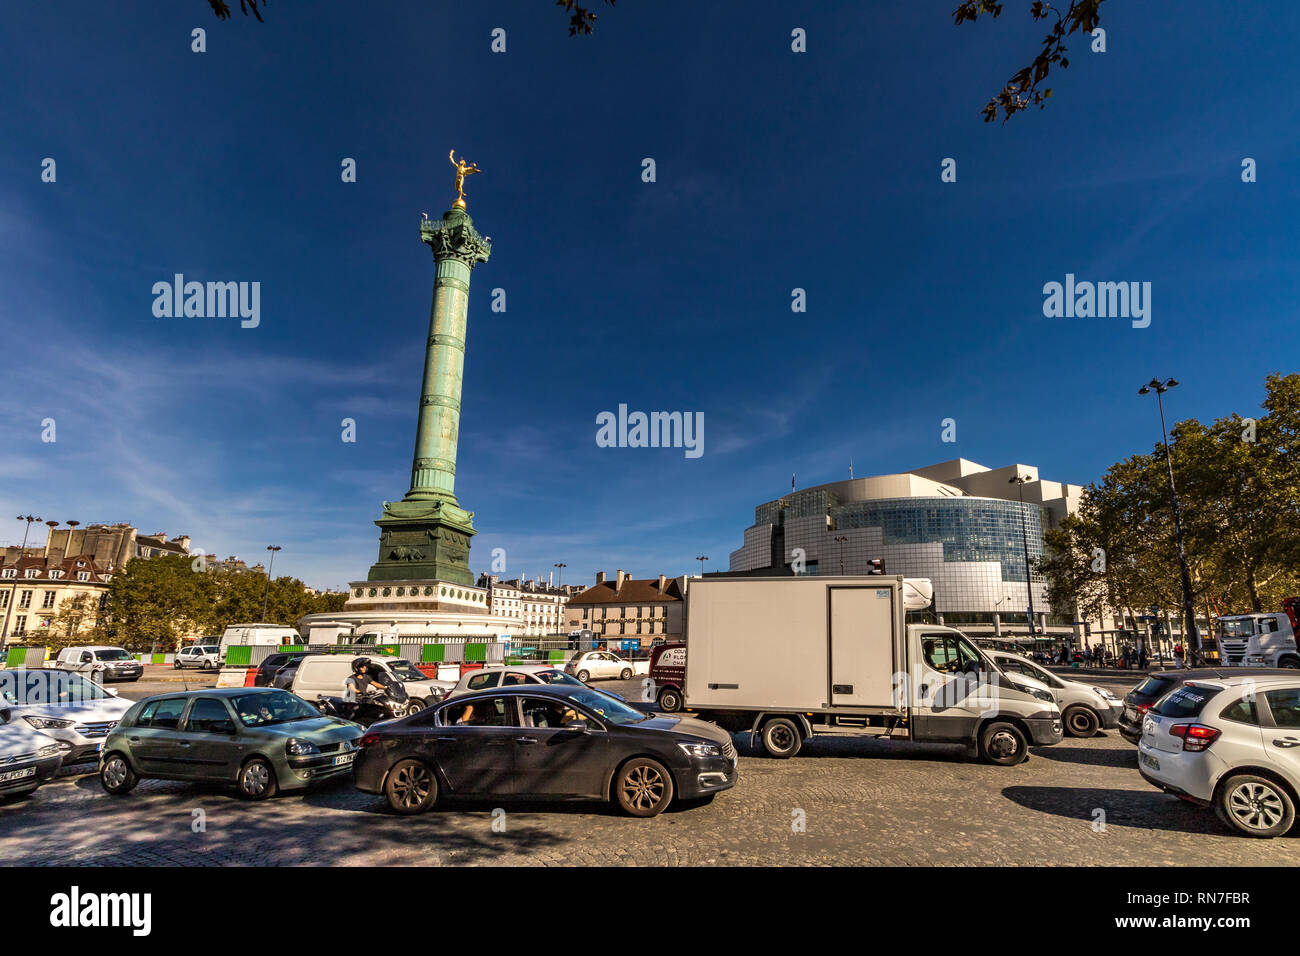 The July column in the centre of Place de la Bastille ,a famous historical square in Paris where the Bastille prison once stood. Stock Photo